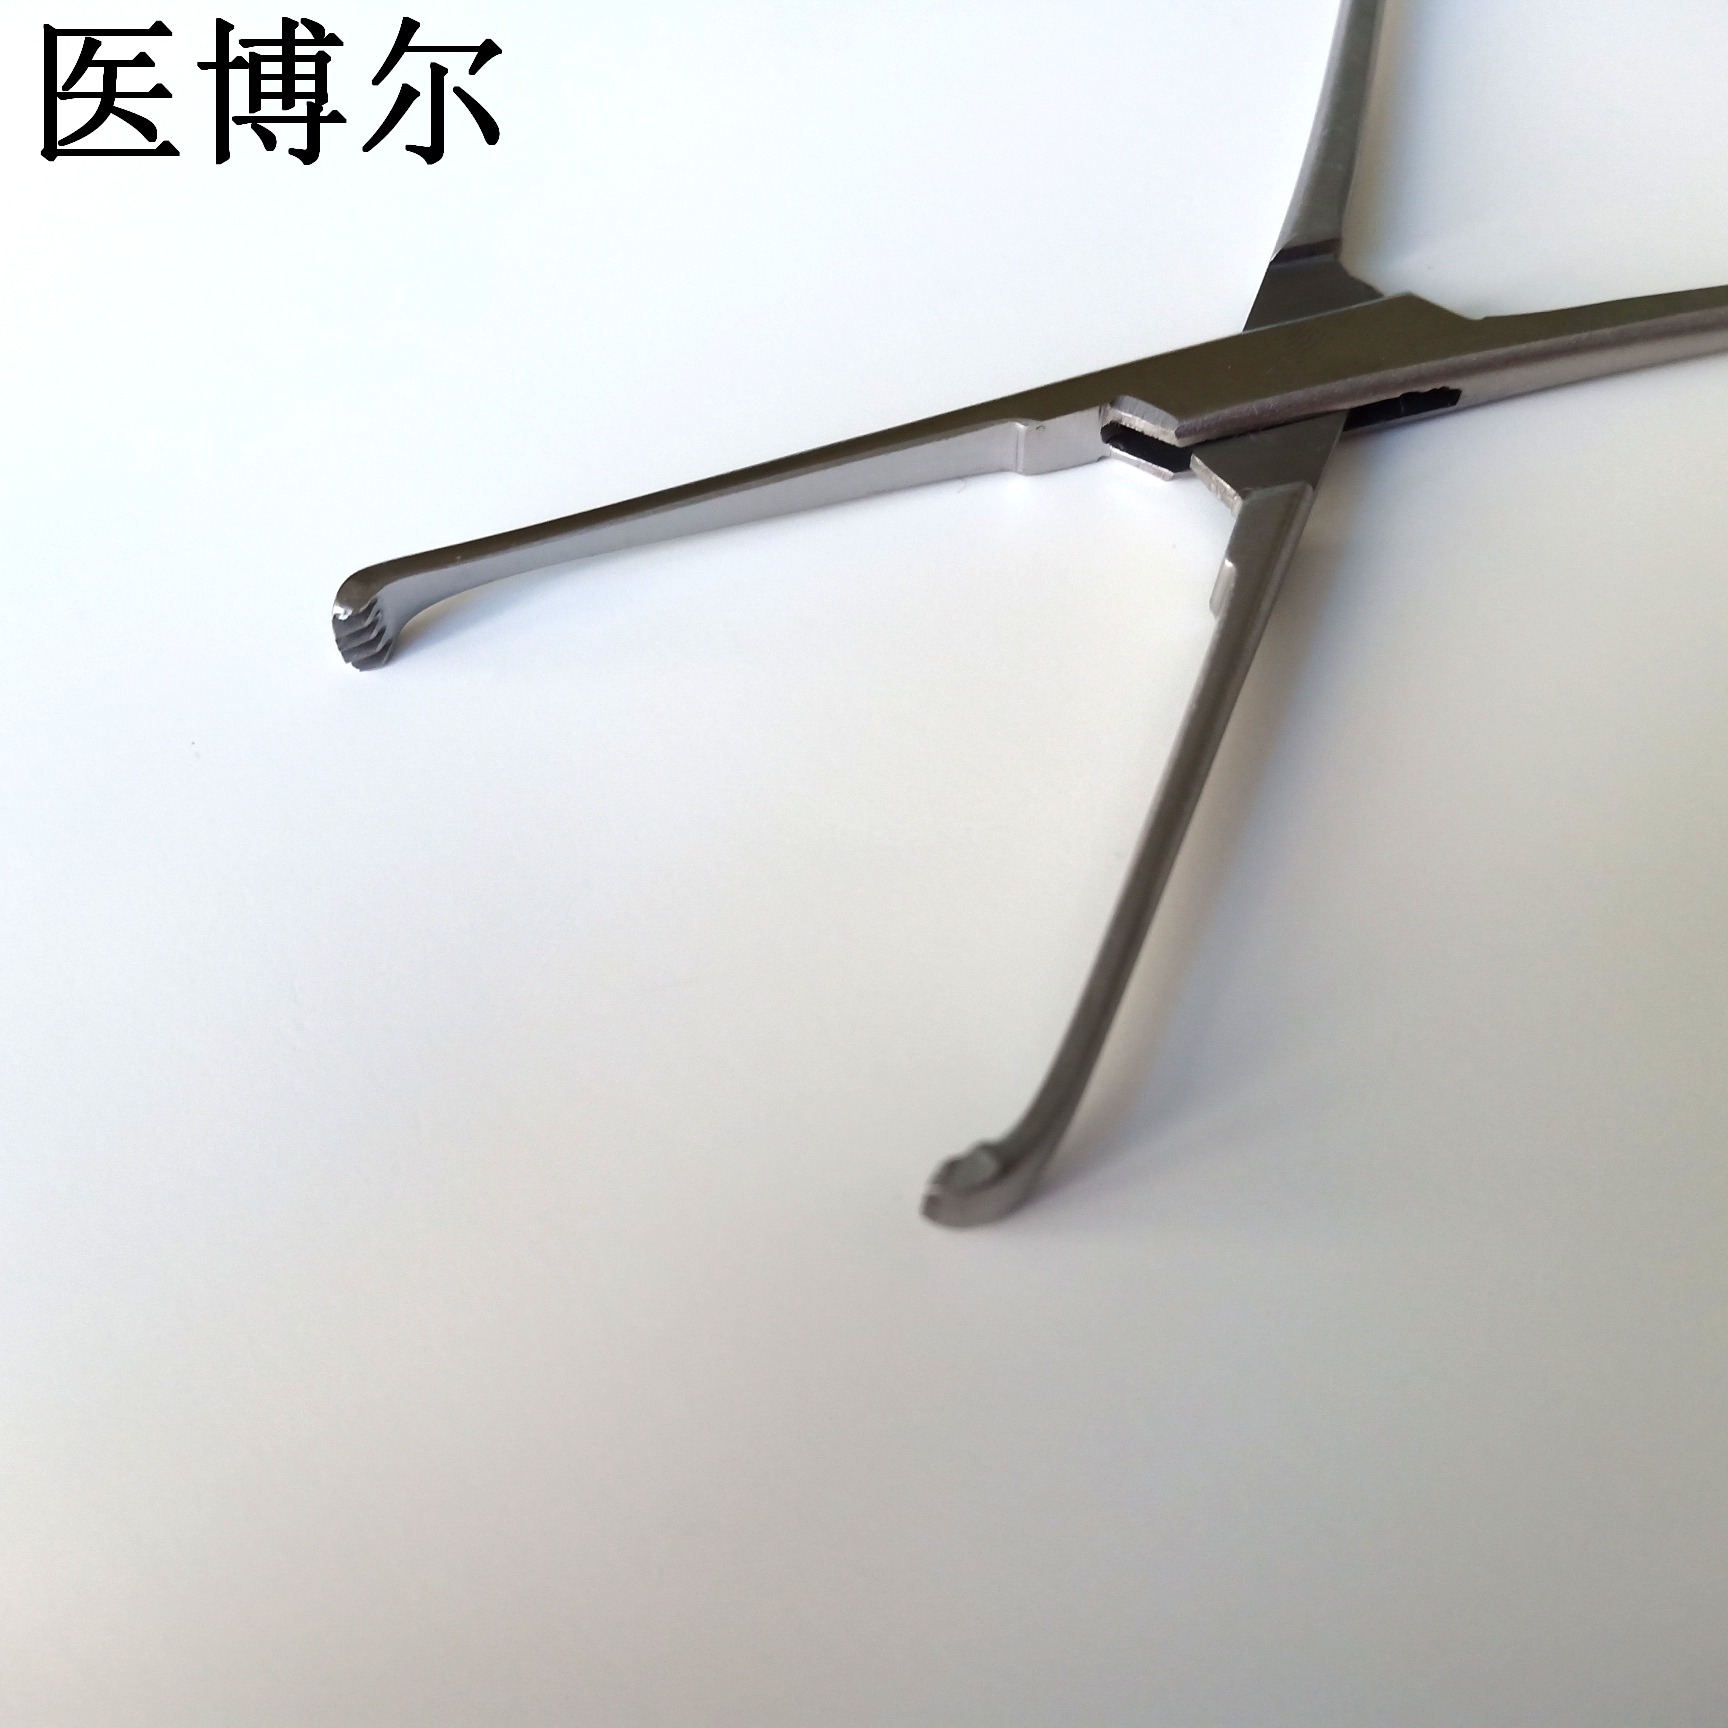 14cm组织钳 (2)_看图王.jpg